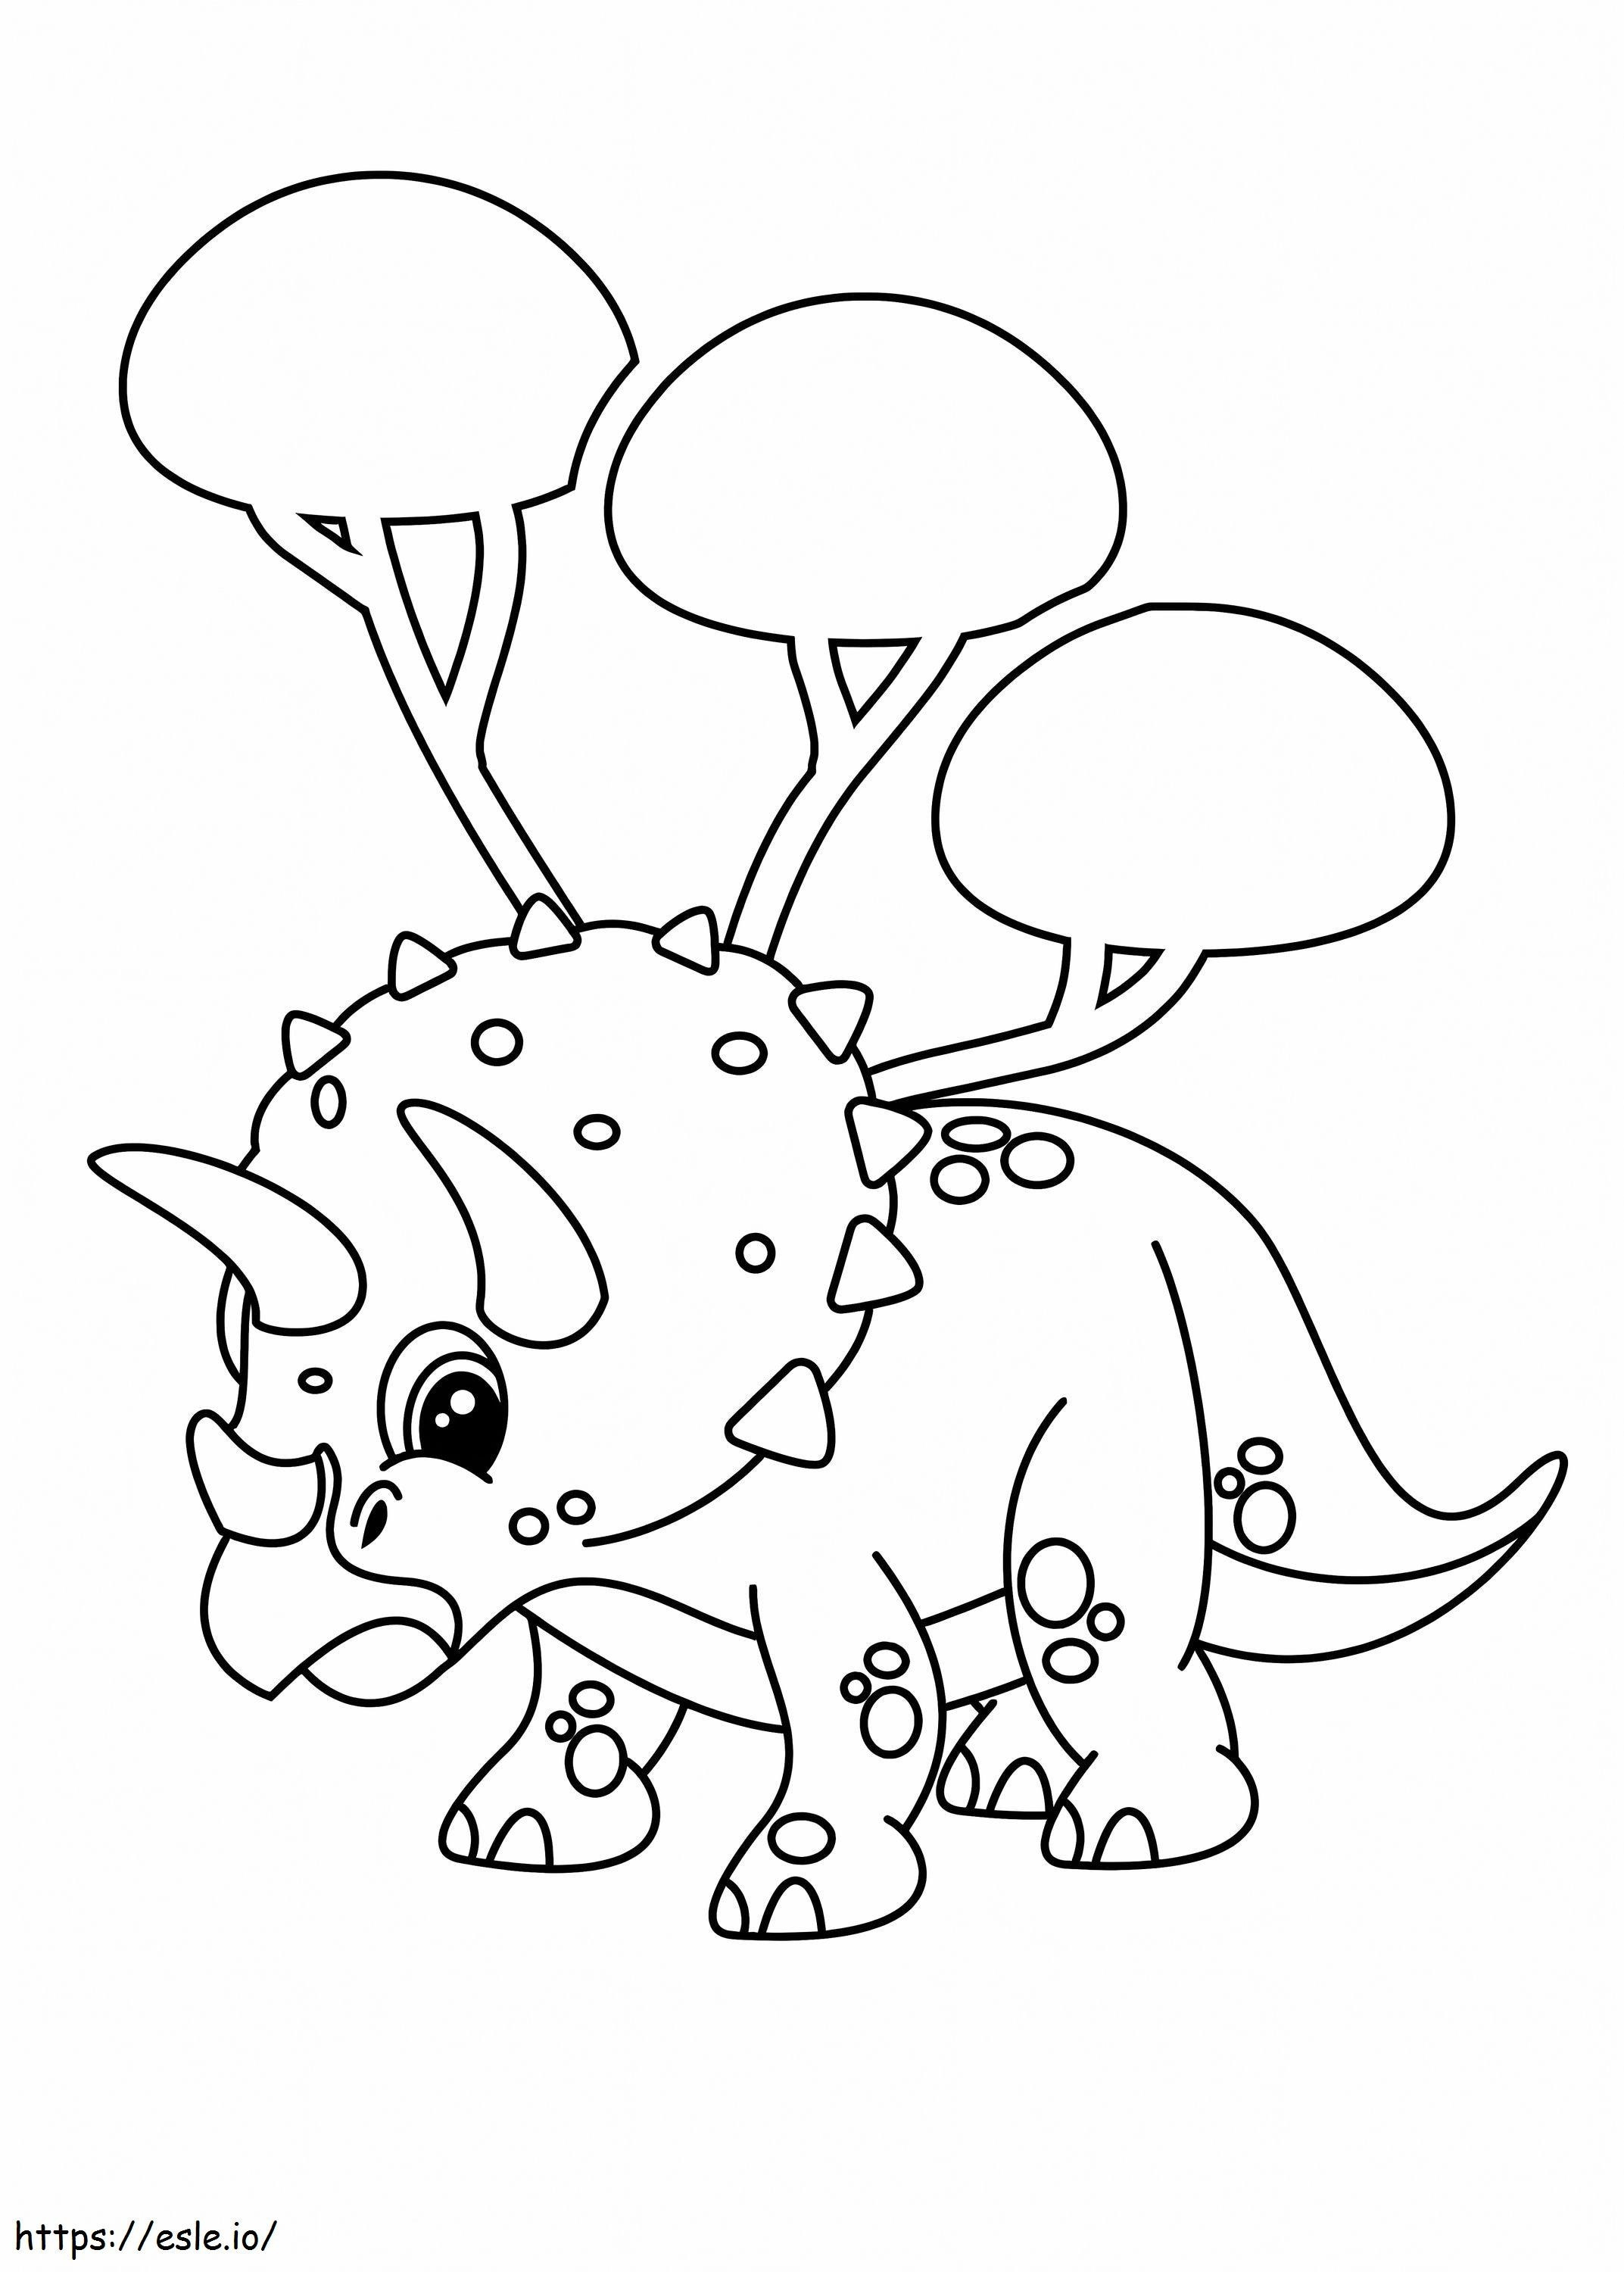 İnanılmaz Triceratop boyama